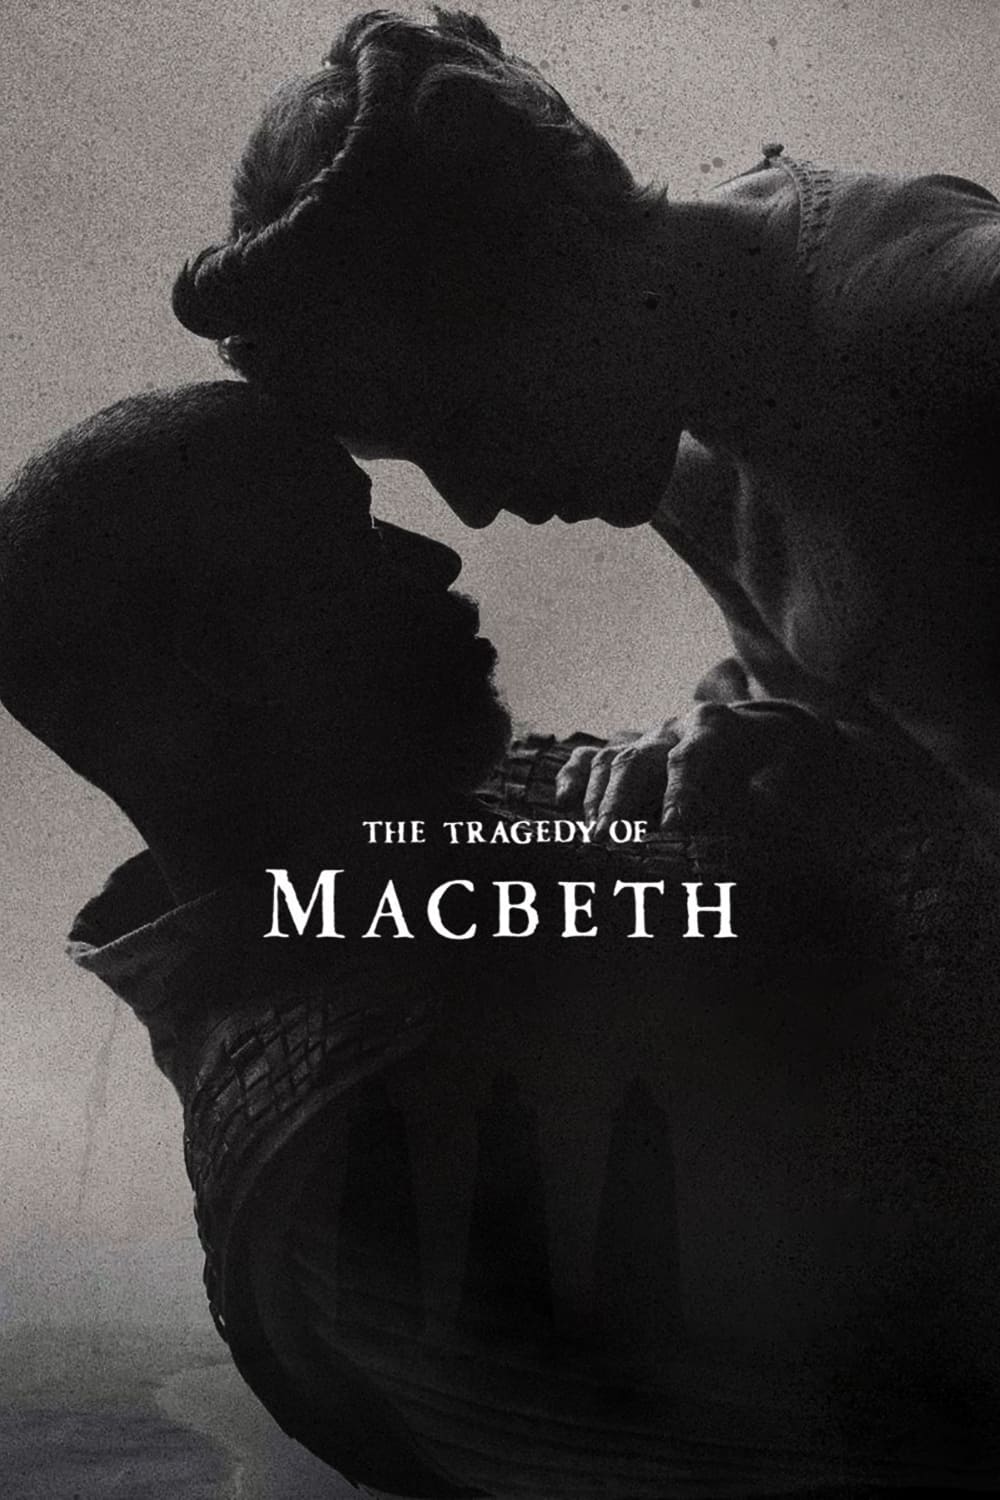 The Tragedy Of Macbeth Dvd Release Date Redbox Netflix Itunes Amazon